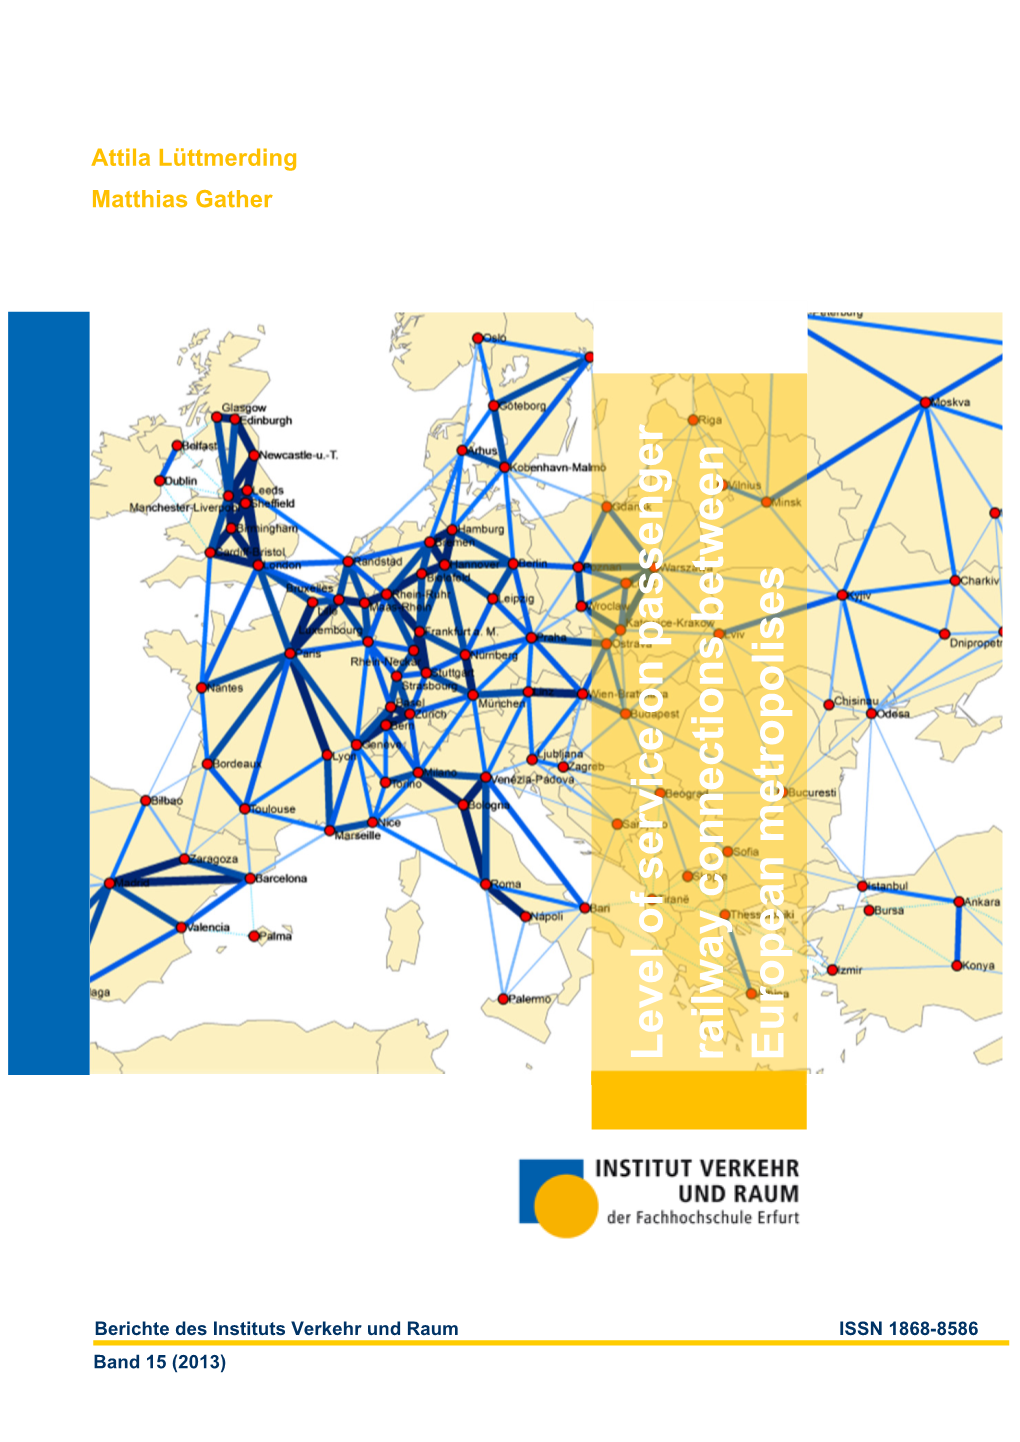 Level of Service on Passenger Railway Connections Between European Metropolises